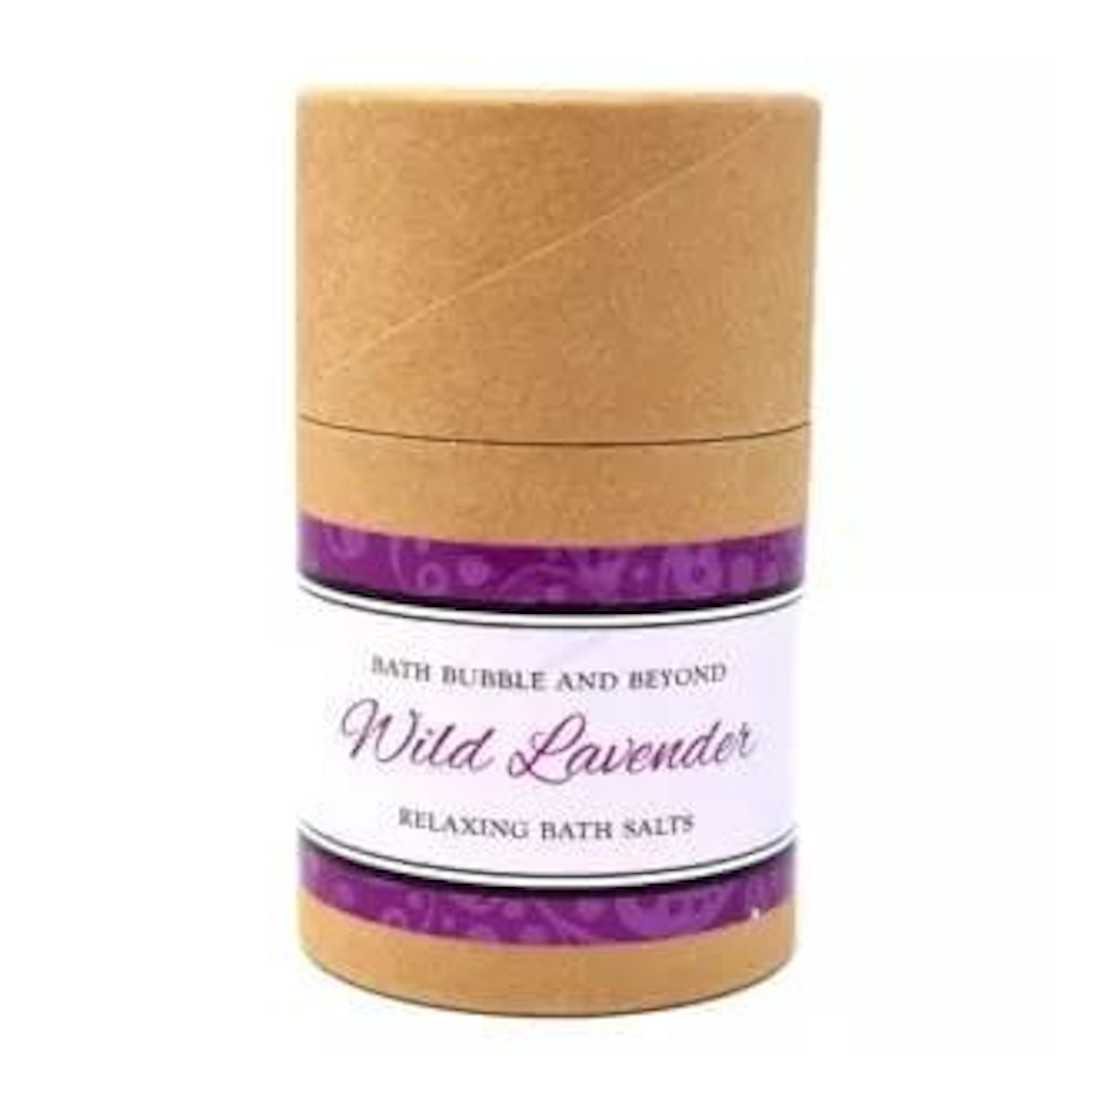 Bath Bubble and Beyond Wild Lavender Bath Salts 300g